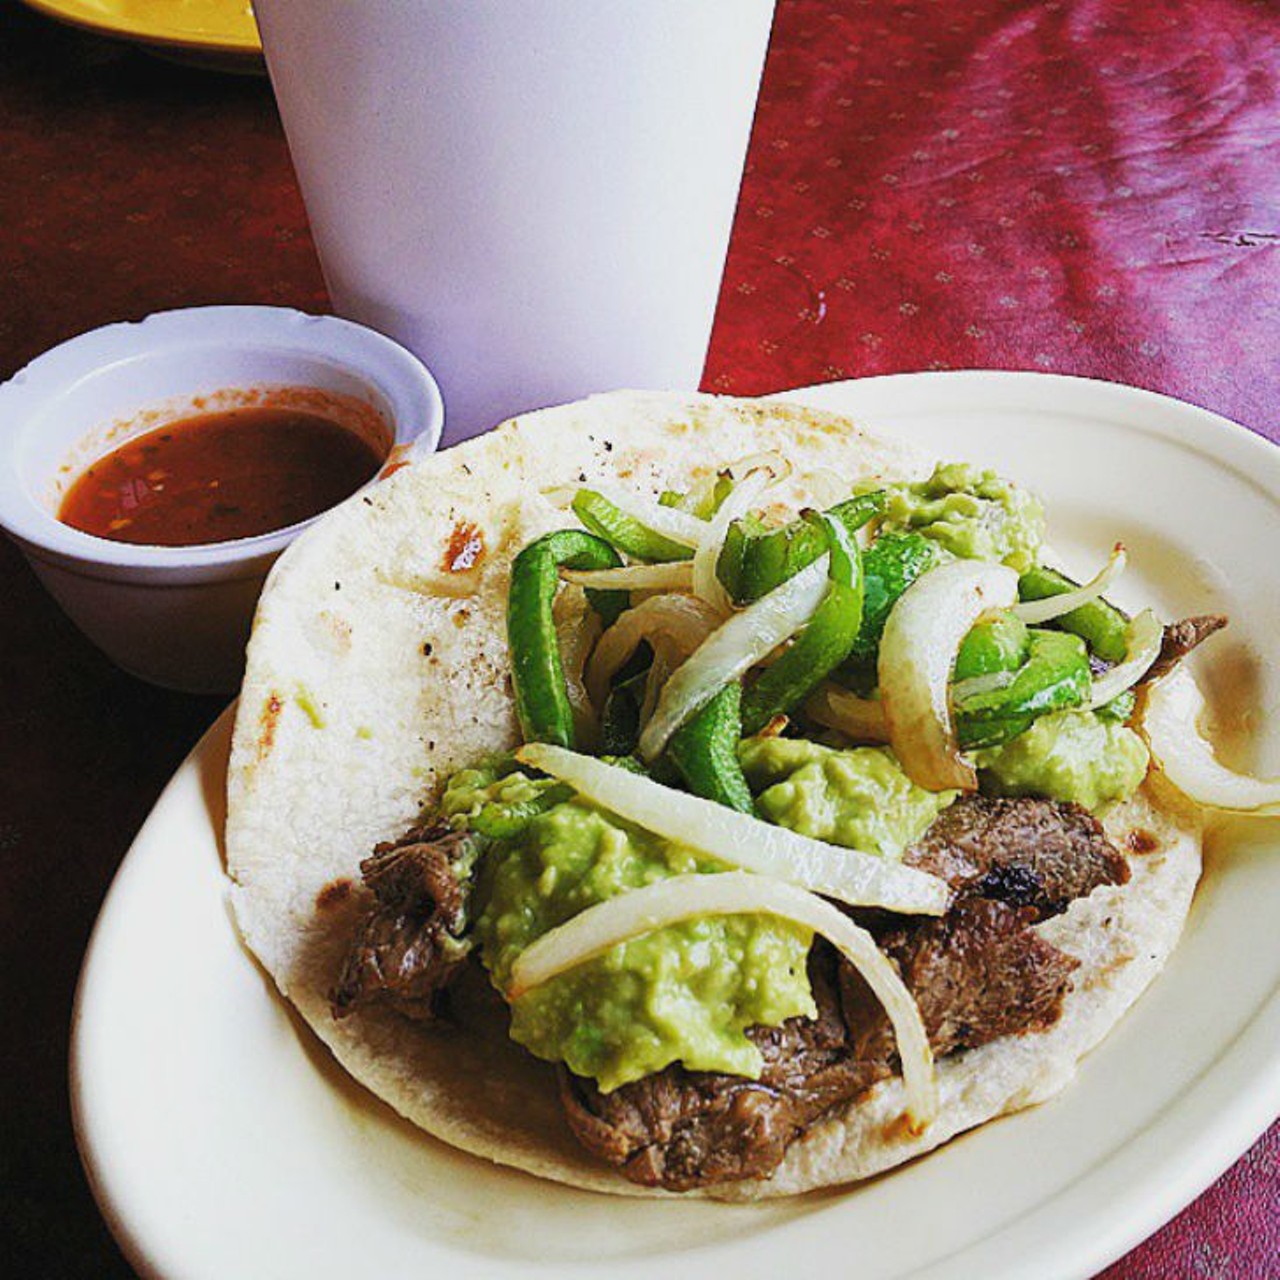 Fajita Taco Place
Great for breakfast, lunch, or a 2:30 p.m. horchata pick-me-up, Fajita Taco Place offers simple, respectable food.
4503 De Zavala Road, (210) 493-8878 
Photo via Instagram (san_antonio_foodjunkie)